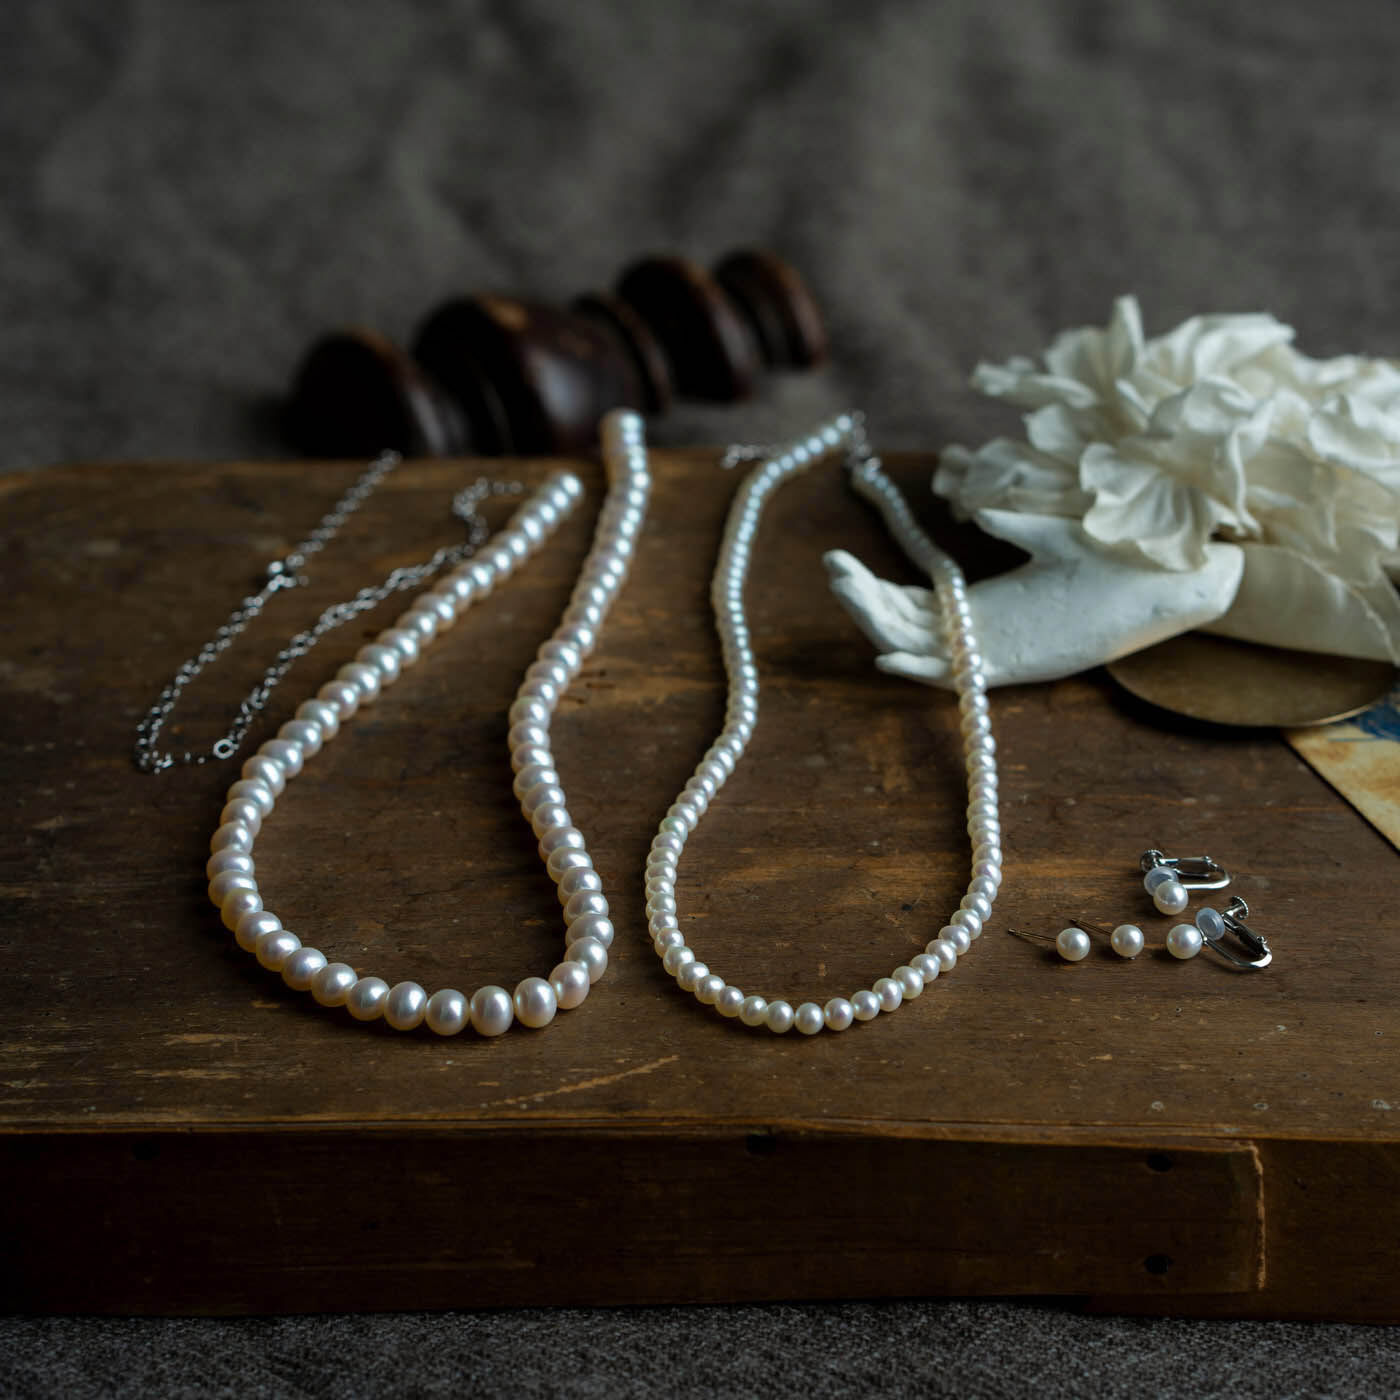 ＆Stories|神戸の老舗真珠メーカーが手掛けた 淡水パールのネックレス〈シルバー925〉|神戸の老舗真珠メーカーさんが用意してくれた貴重なパールアクセ達。大人のお洒落を楽しめるモノばかりです。